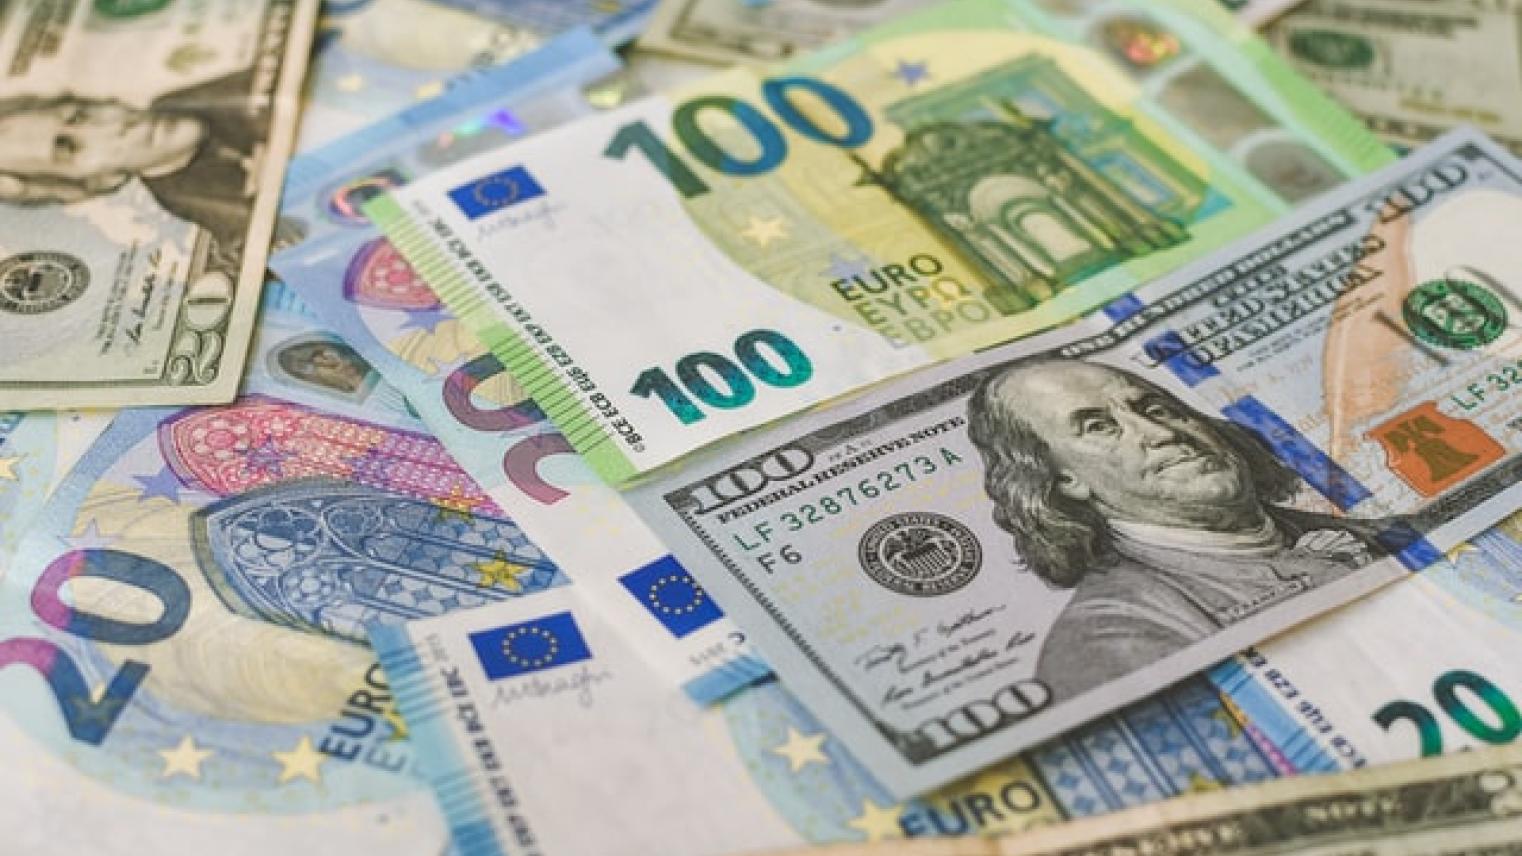 Photo of US and EU banknotes by Ibrahim Boran at https://unsplash.com/photos/YVnvtMA2mok (Free to use under Unsplash licence)